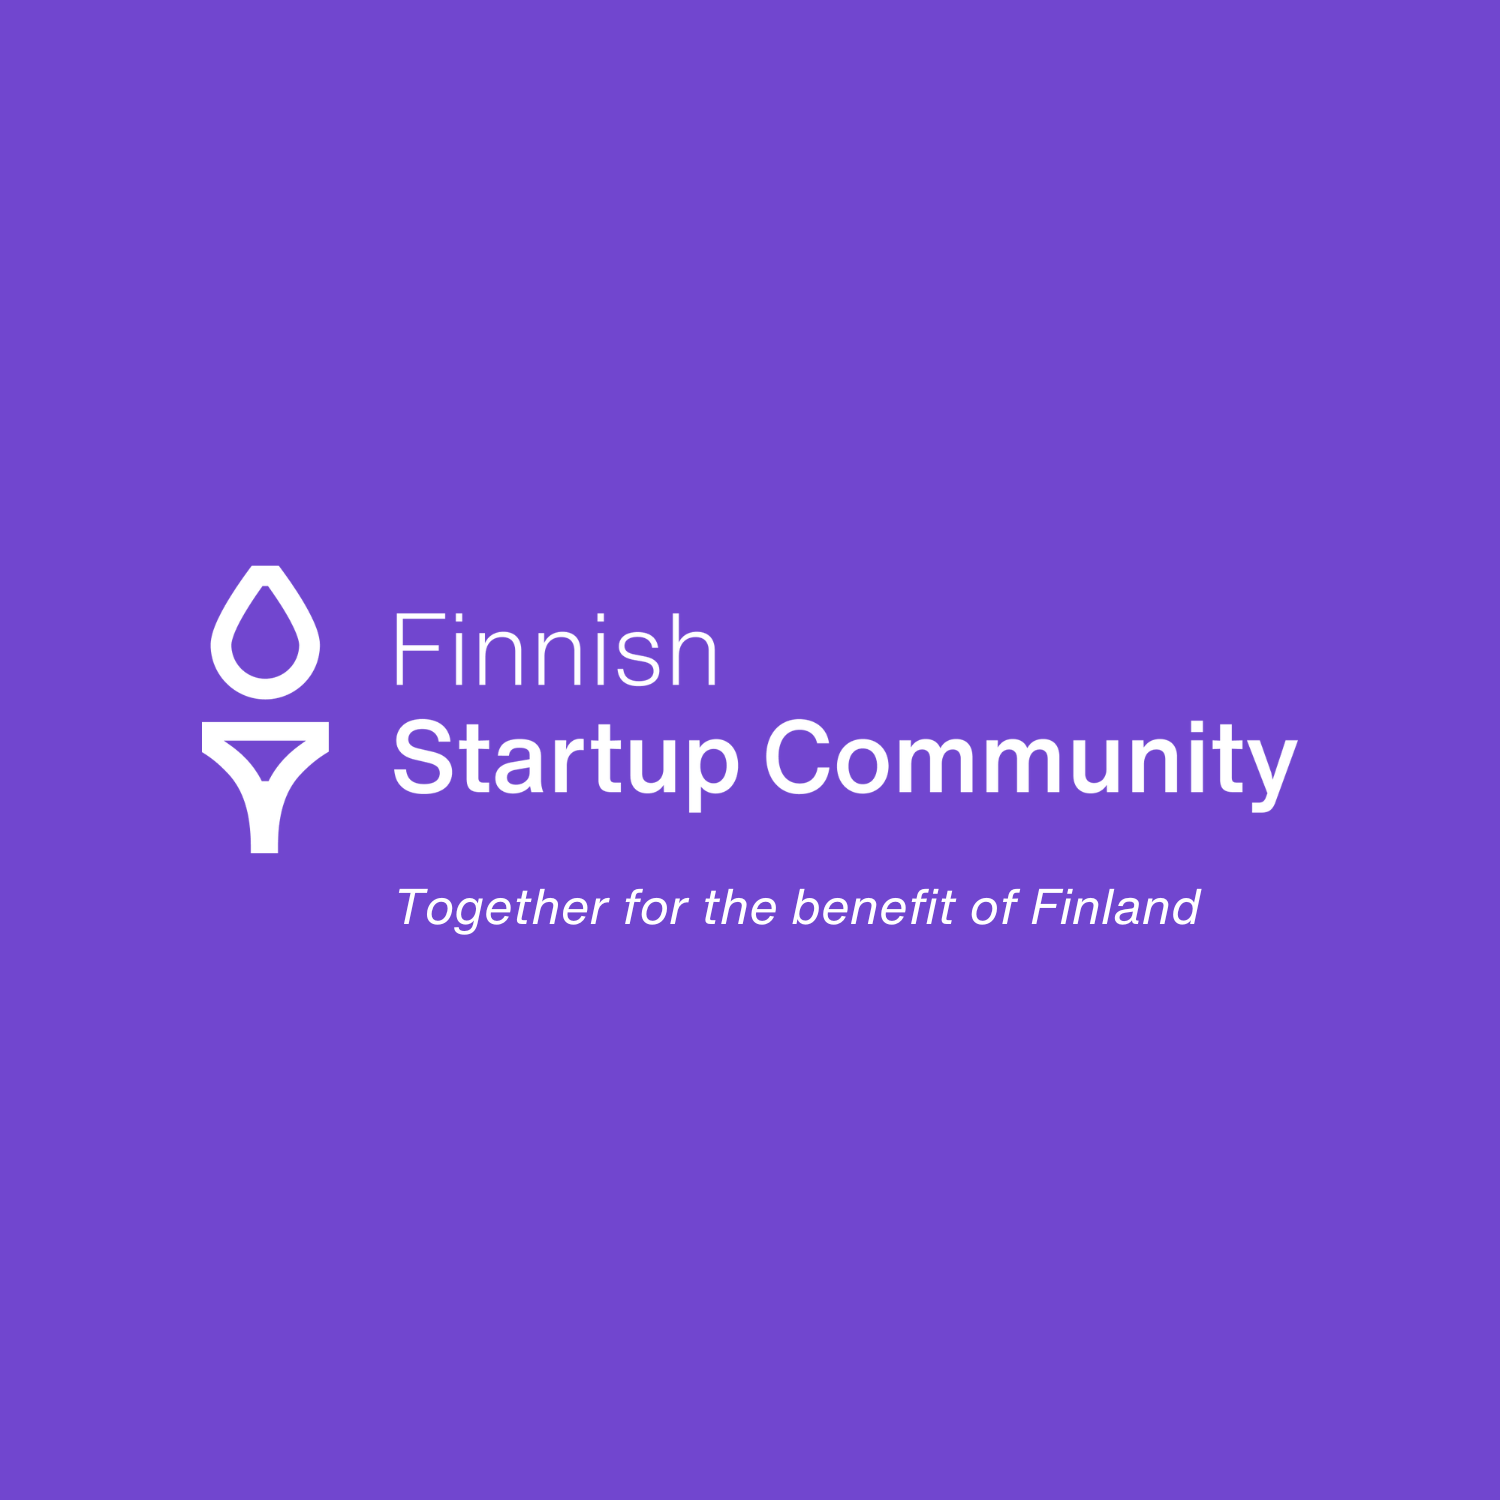 Finnish Startup Community